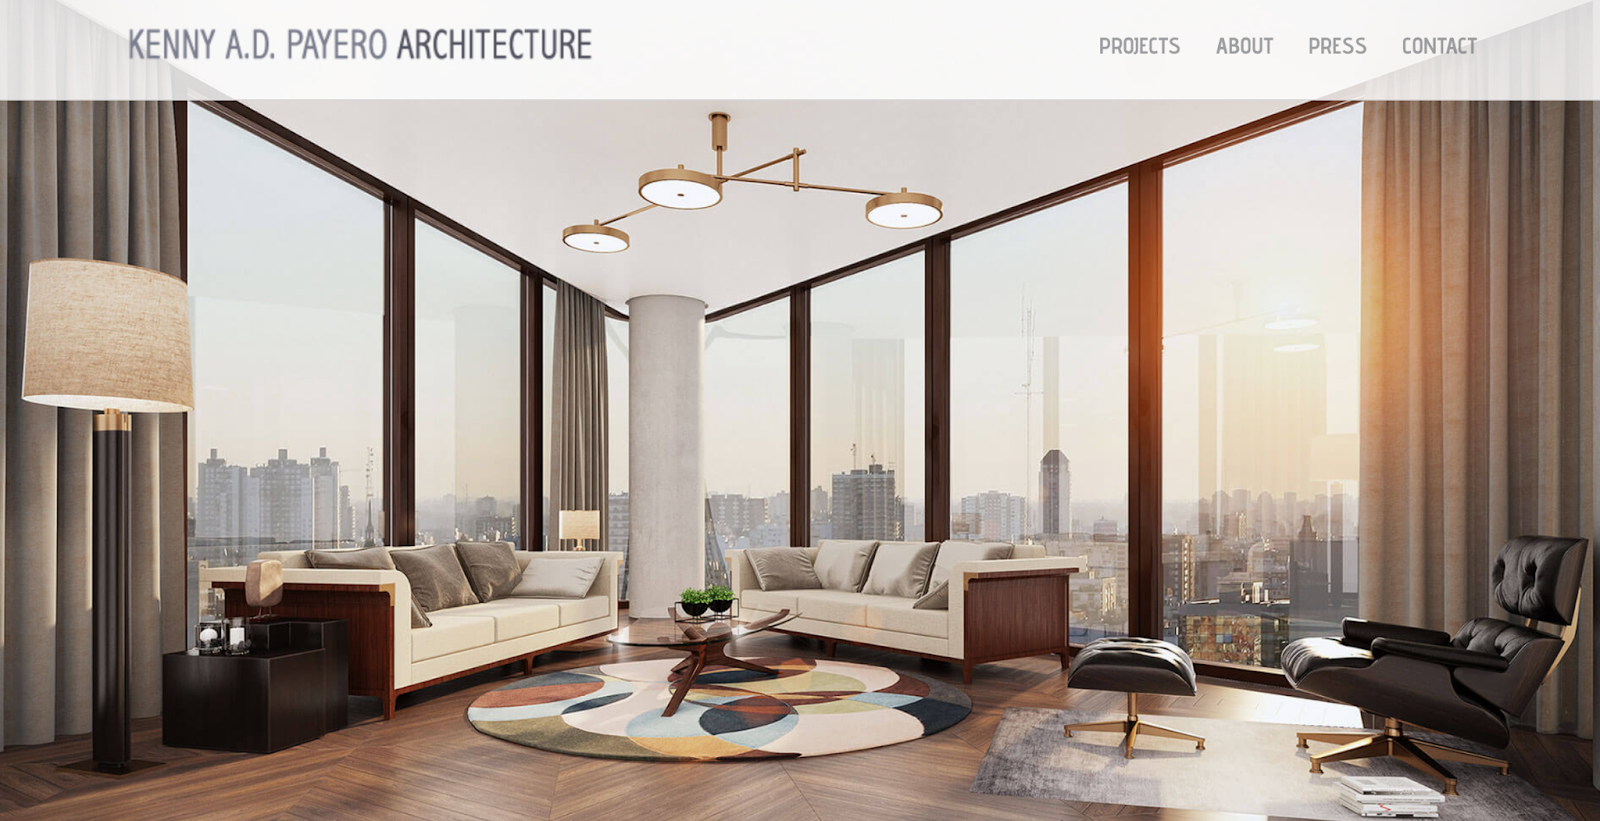 Architecture website example: Kenny Payero Architecture